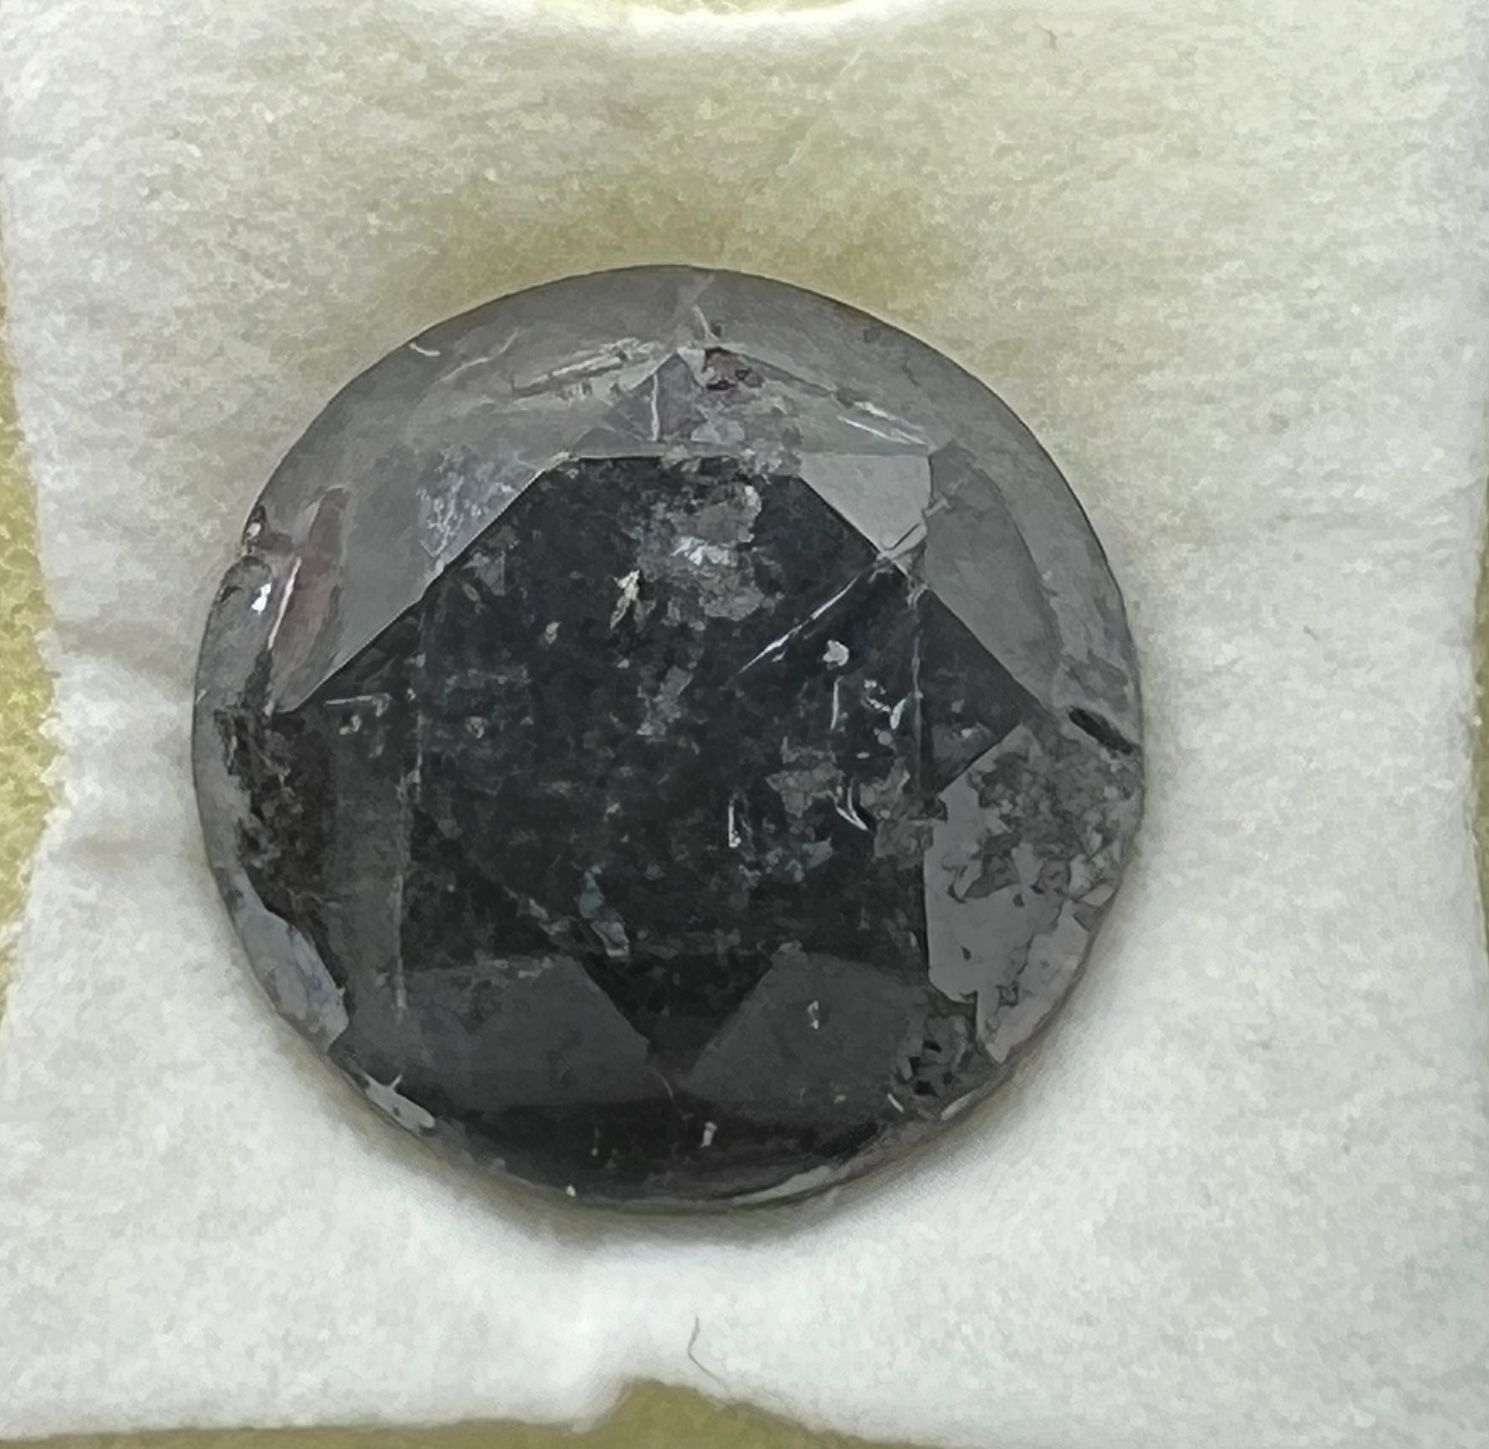 Diamant BLACK DIAMOND 12.81 carat AIGT certificate